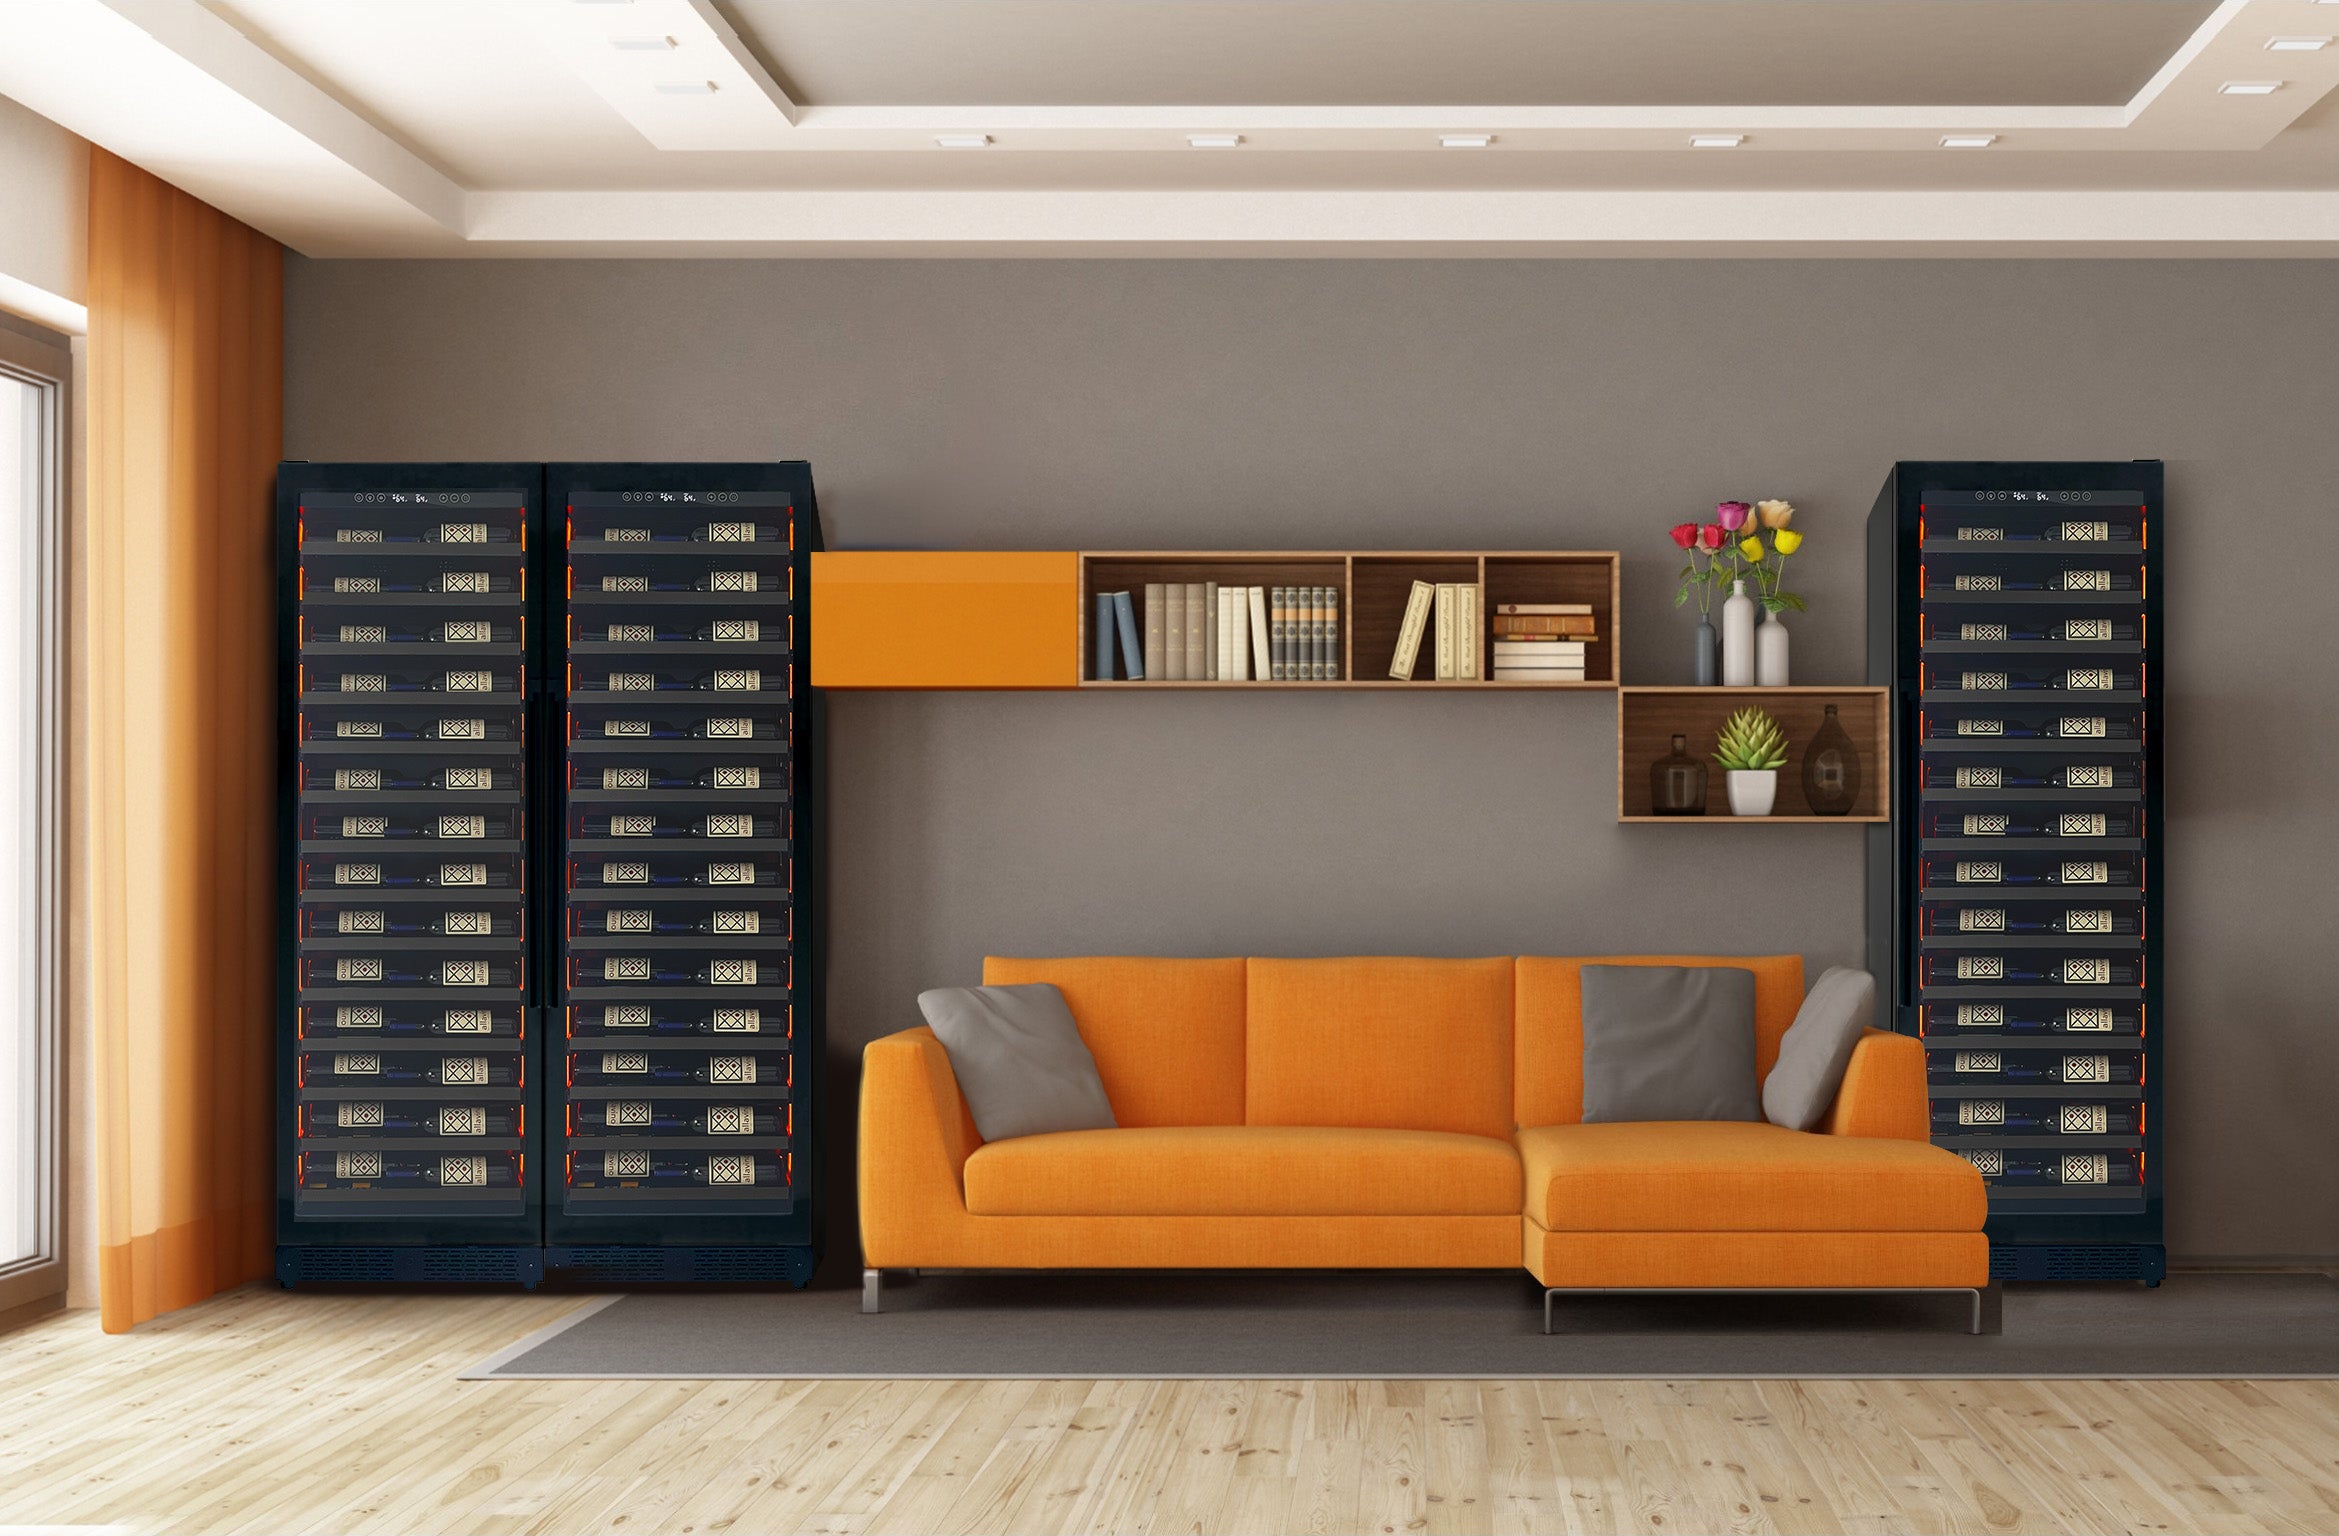 Monolithic black standing wine refrigerators flank a cozy orange sofa